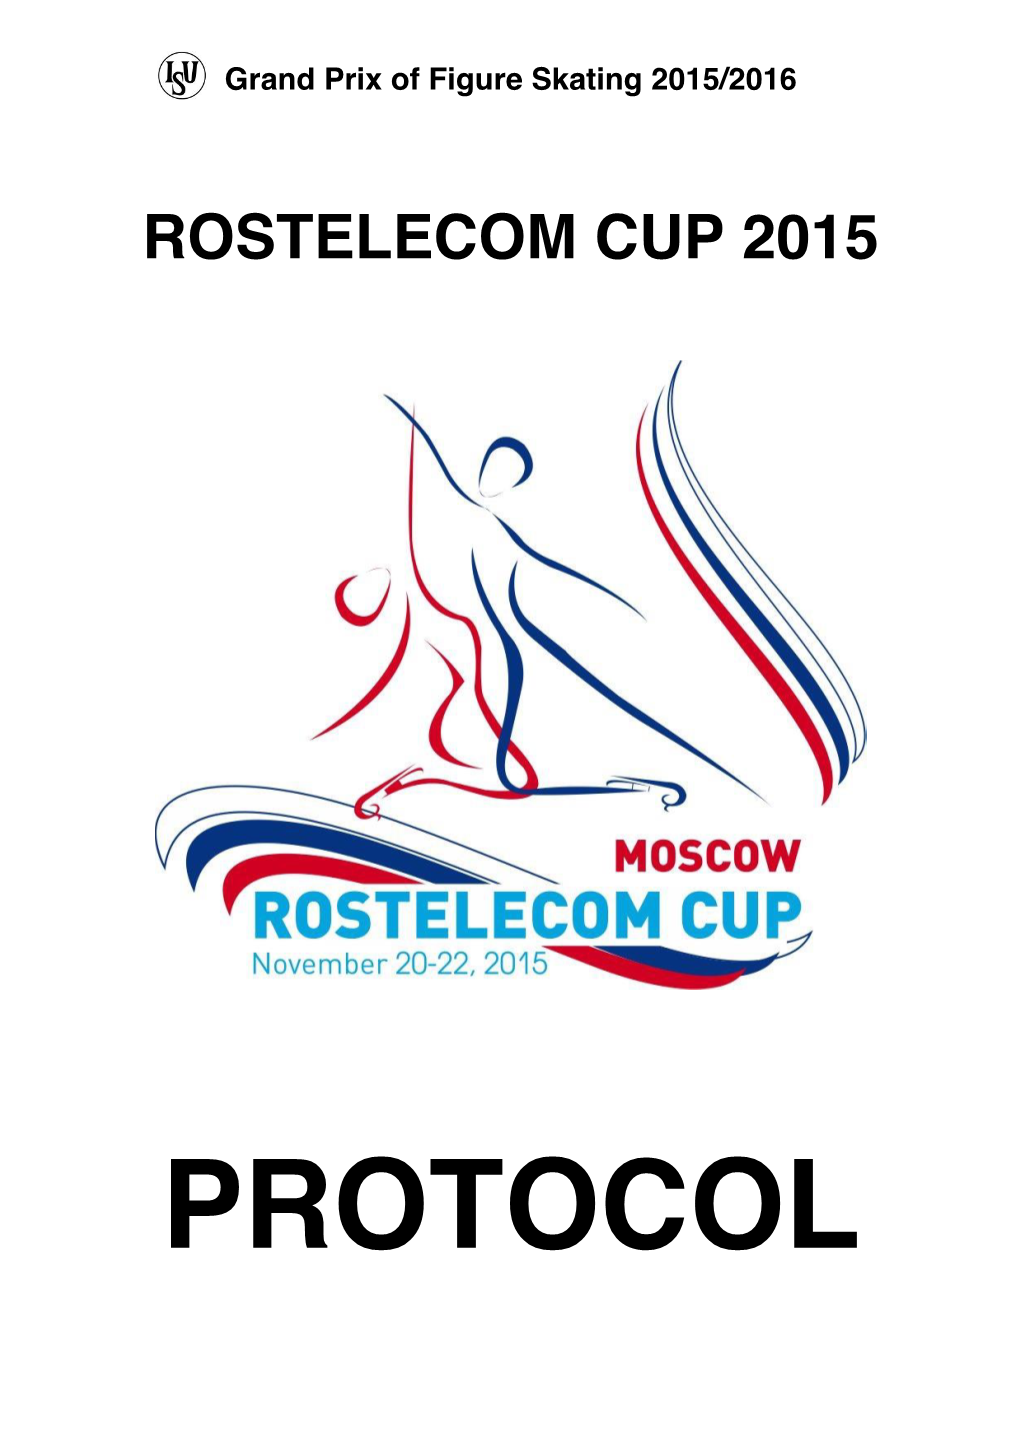 Rostelecom Cup 2015